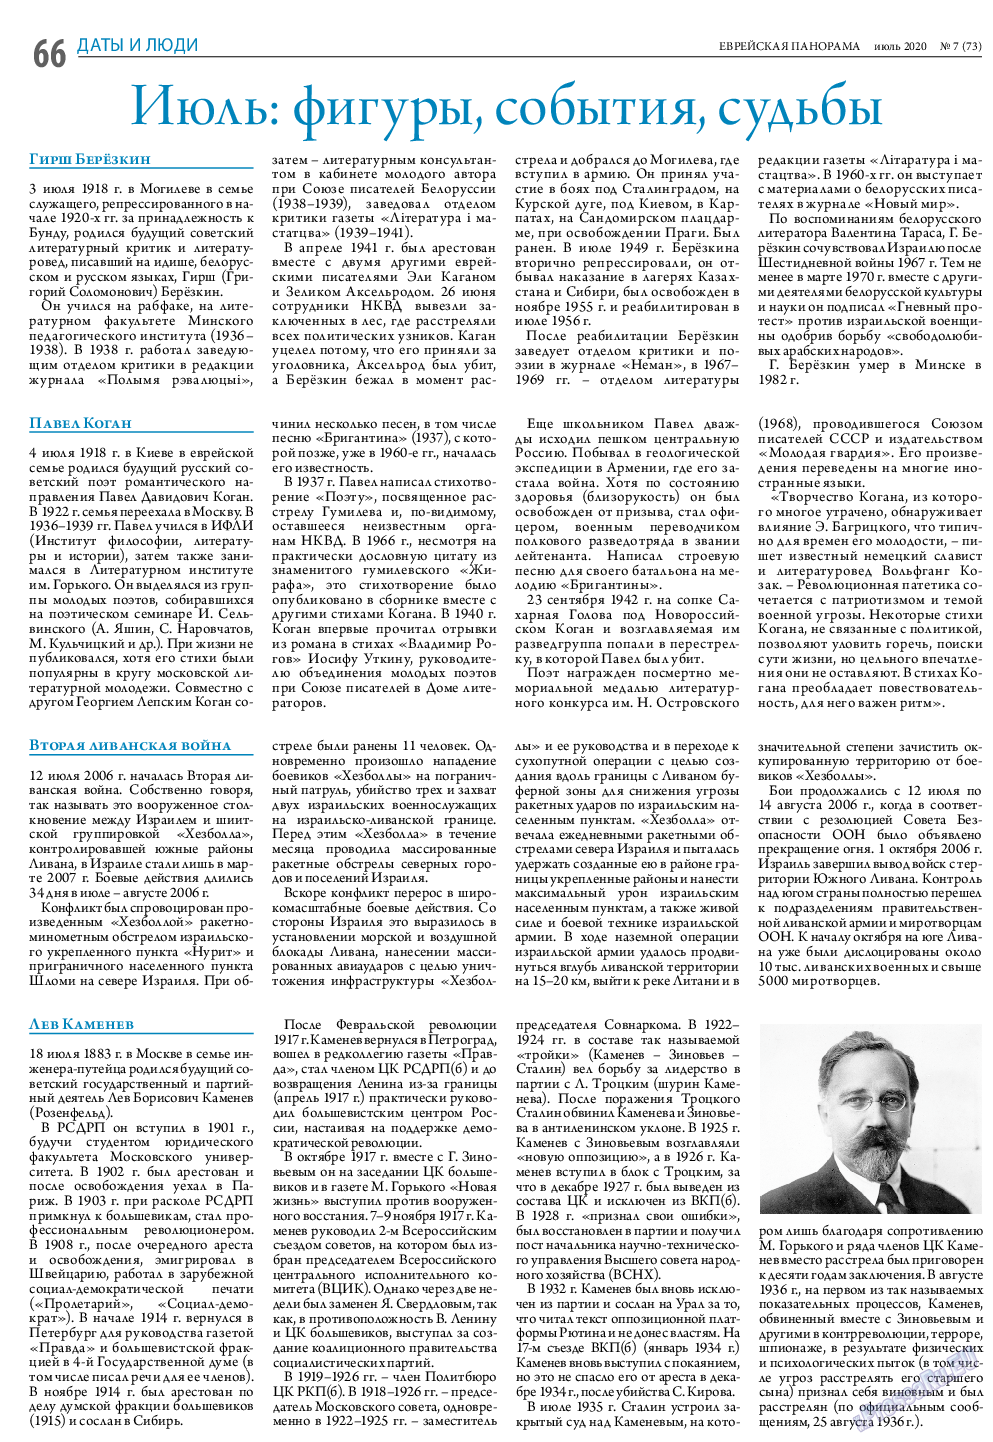 Еврейская панорама, газета. 2020 №7 стр.66